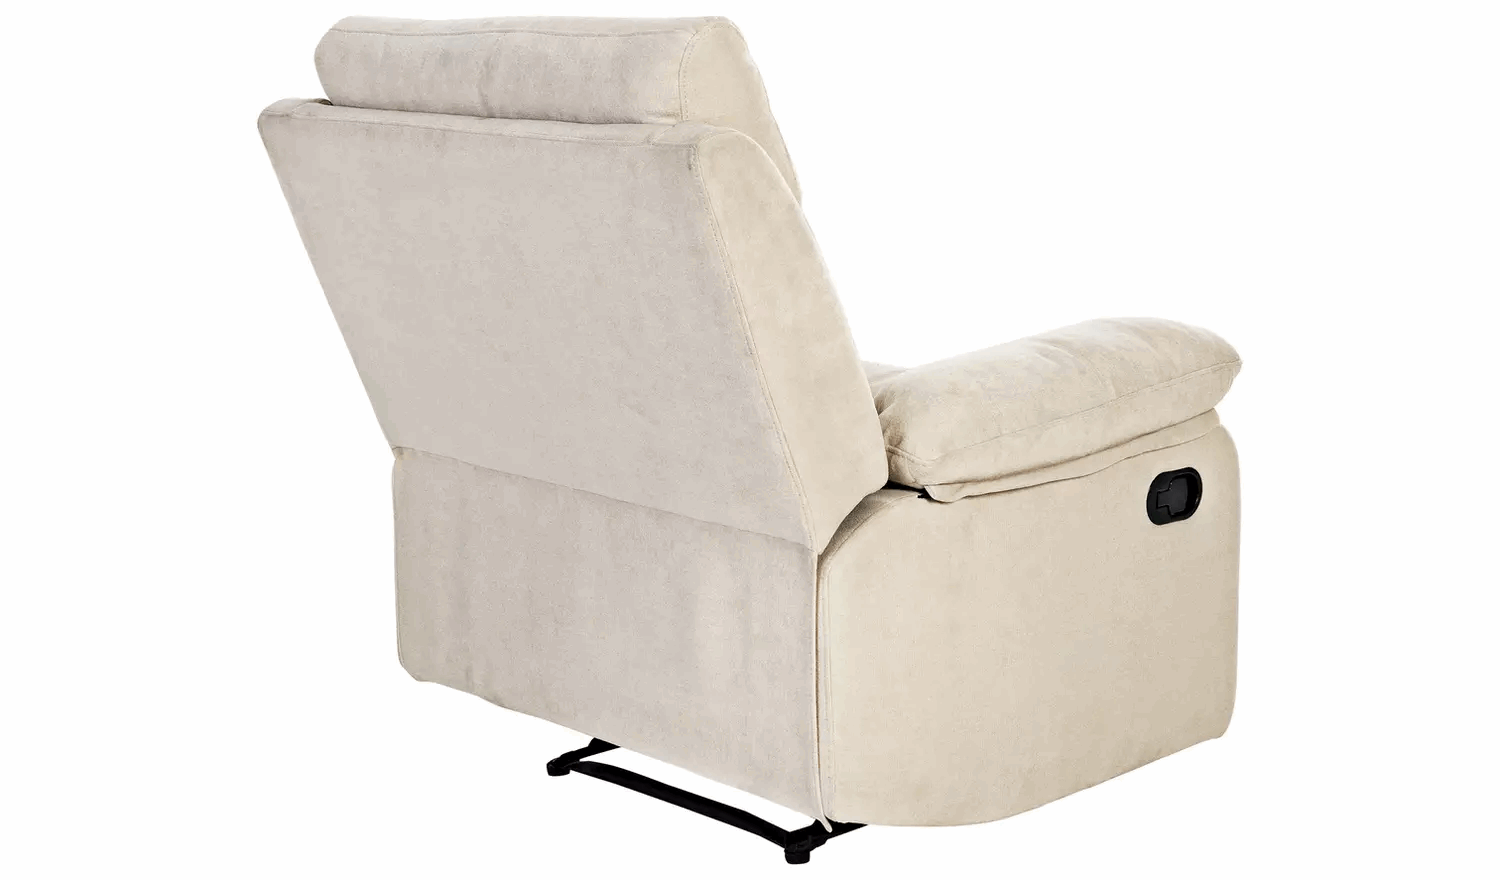 Home June Fabric Manual Recliner Chair - Natural